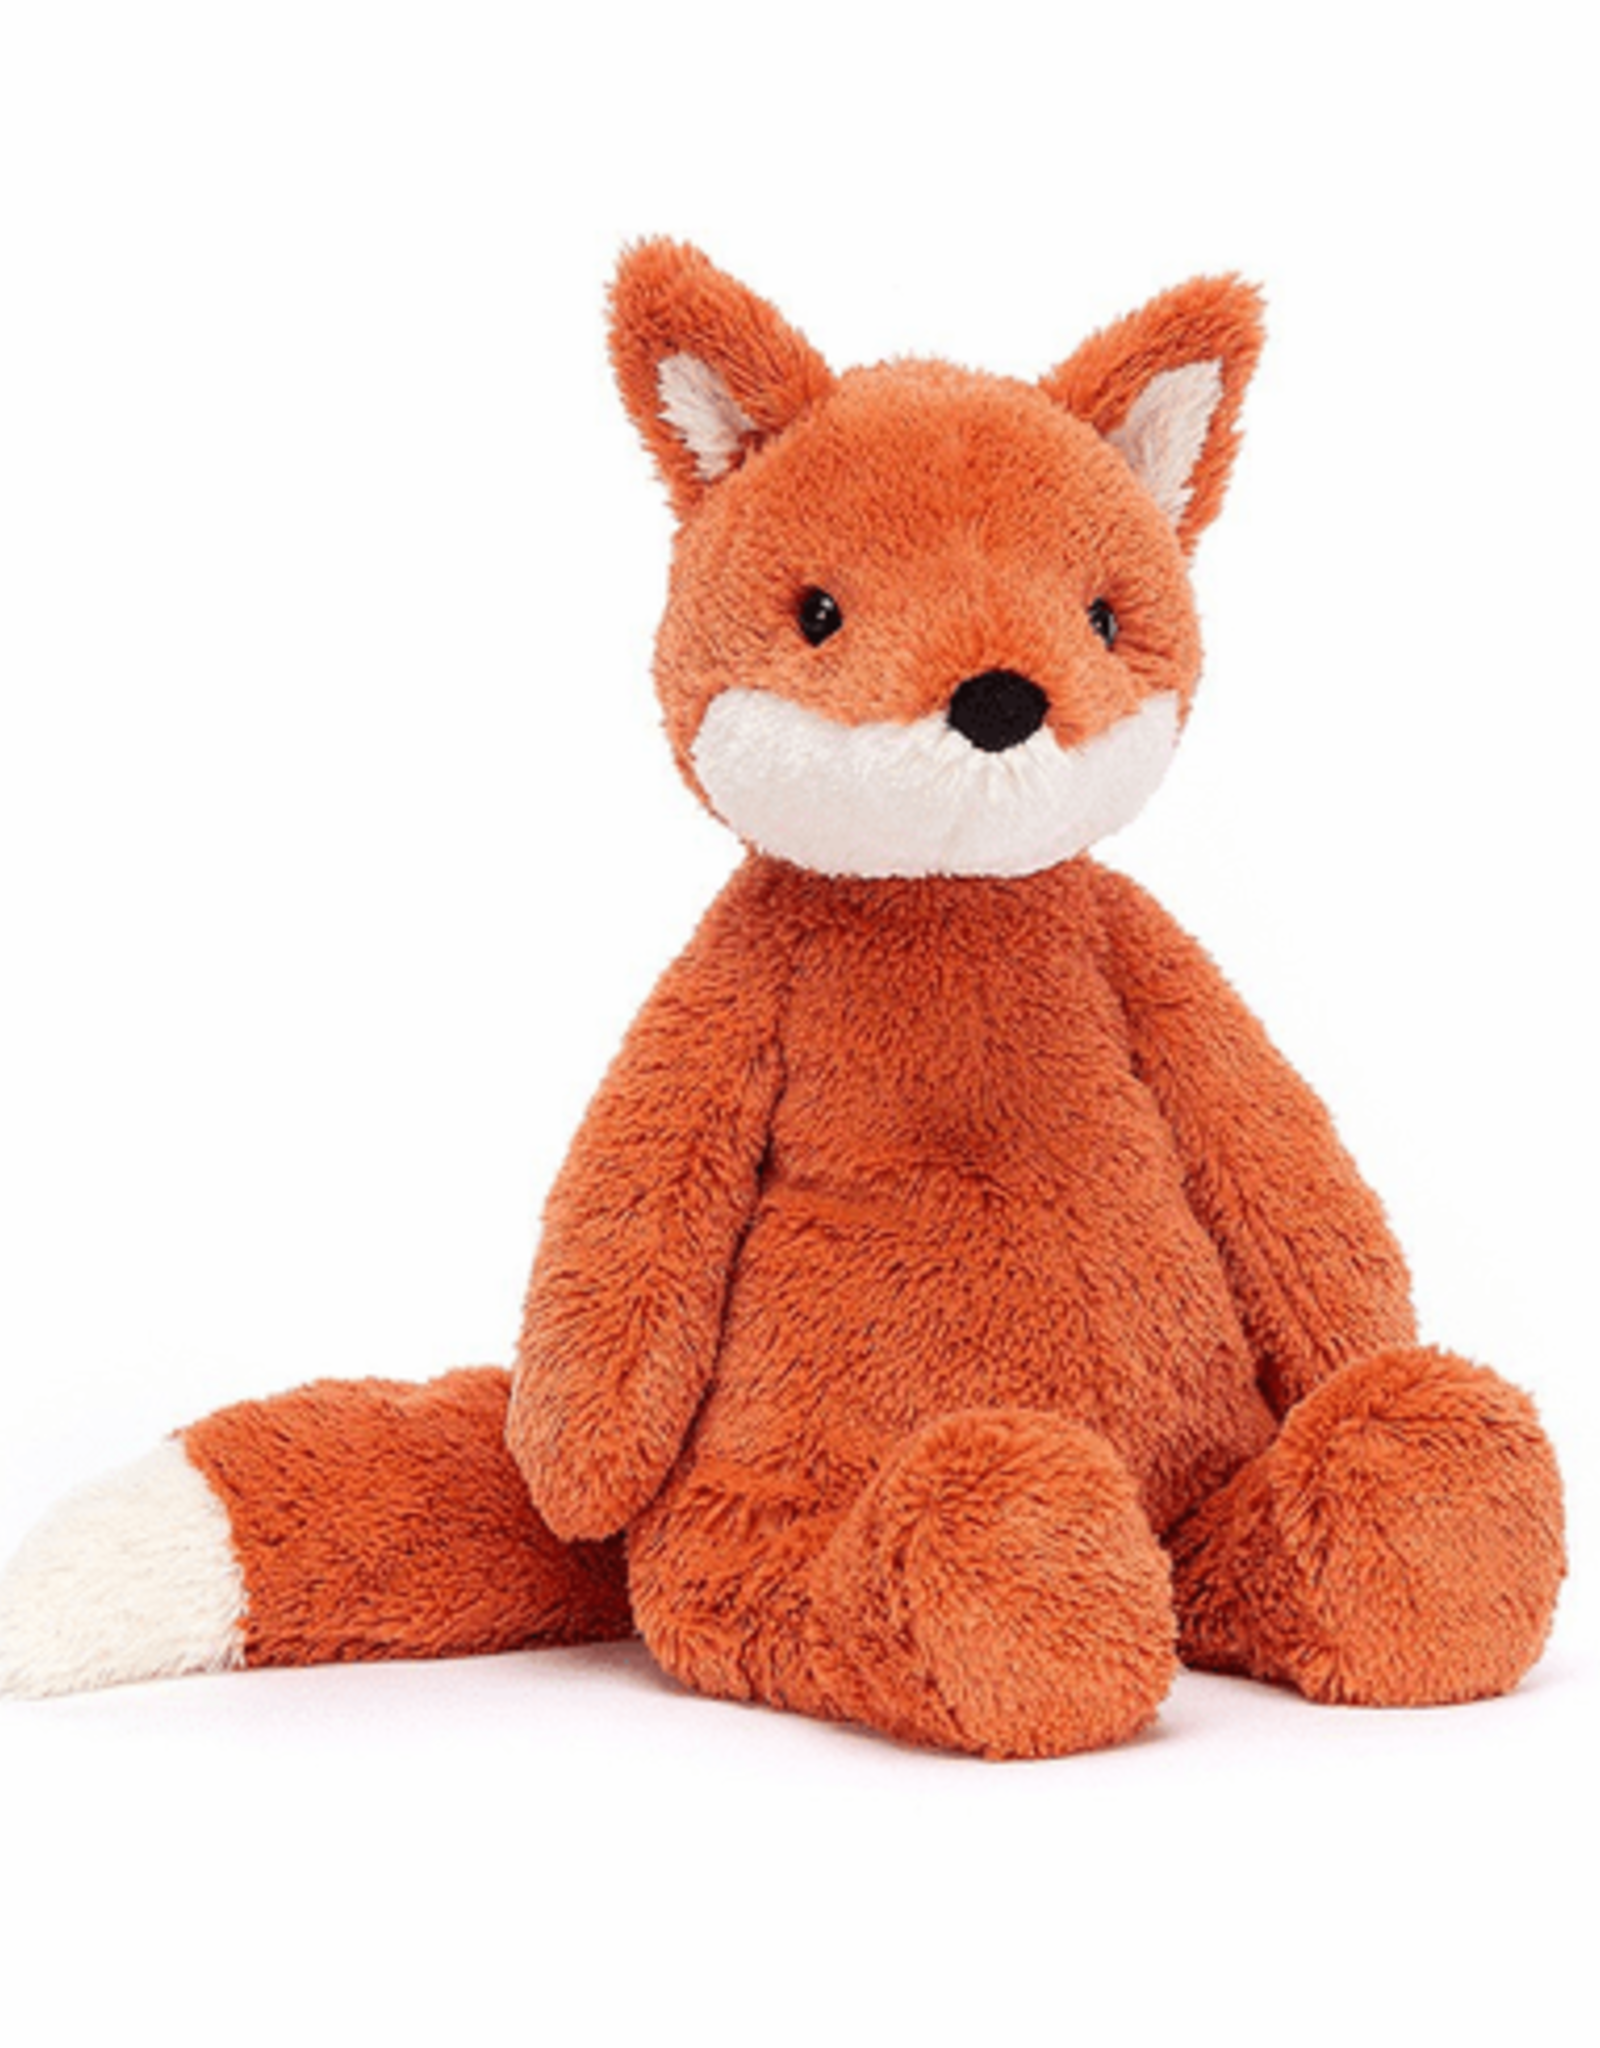 Jellycat cushy fox